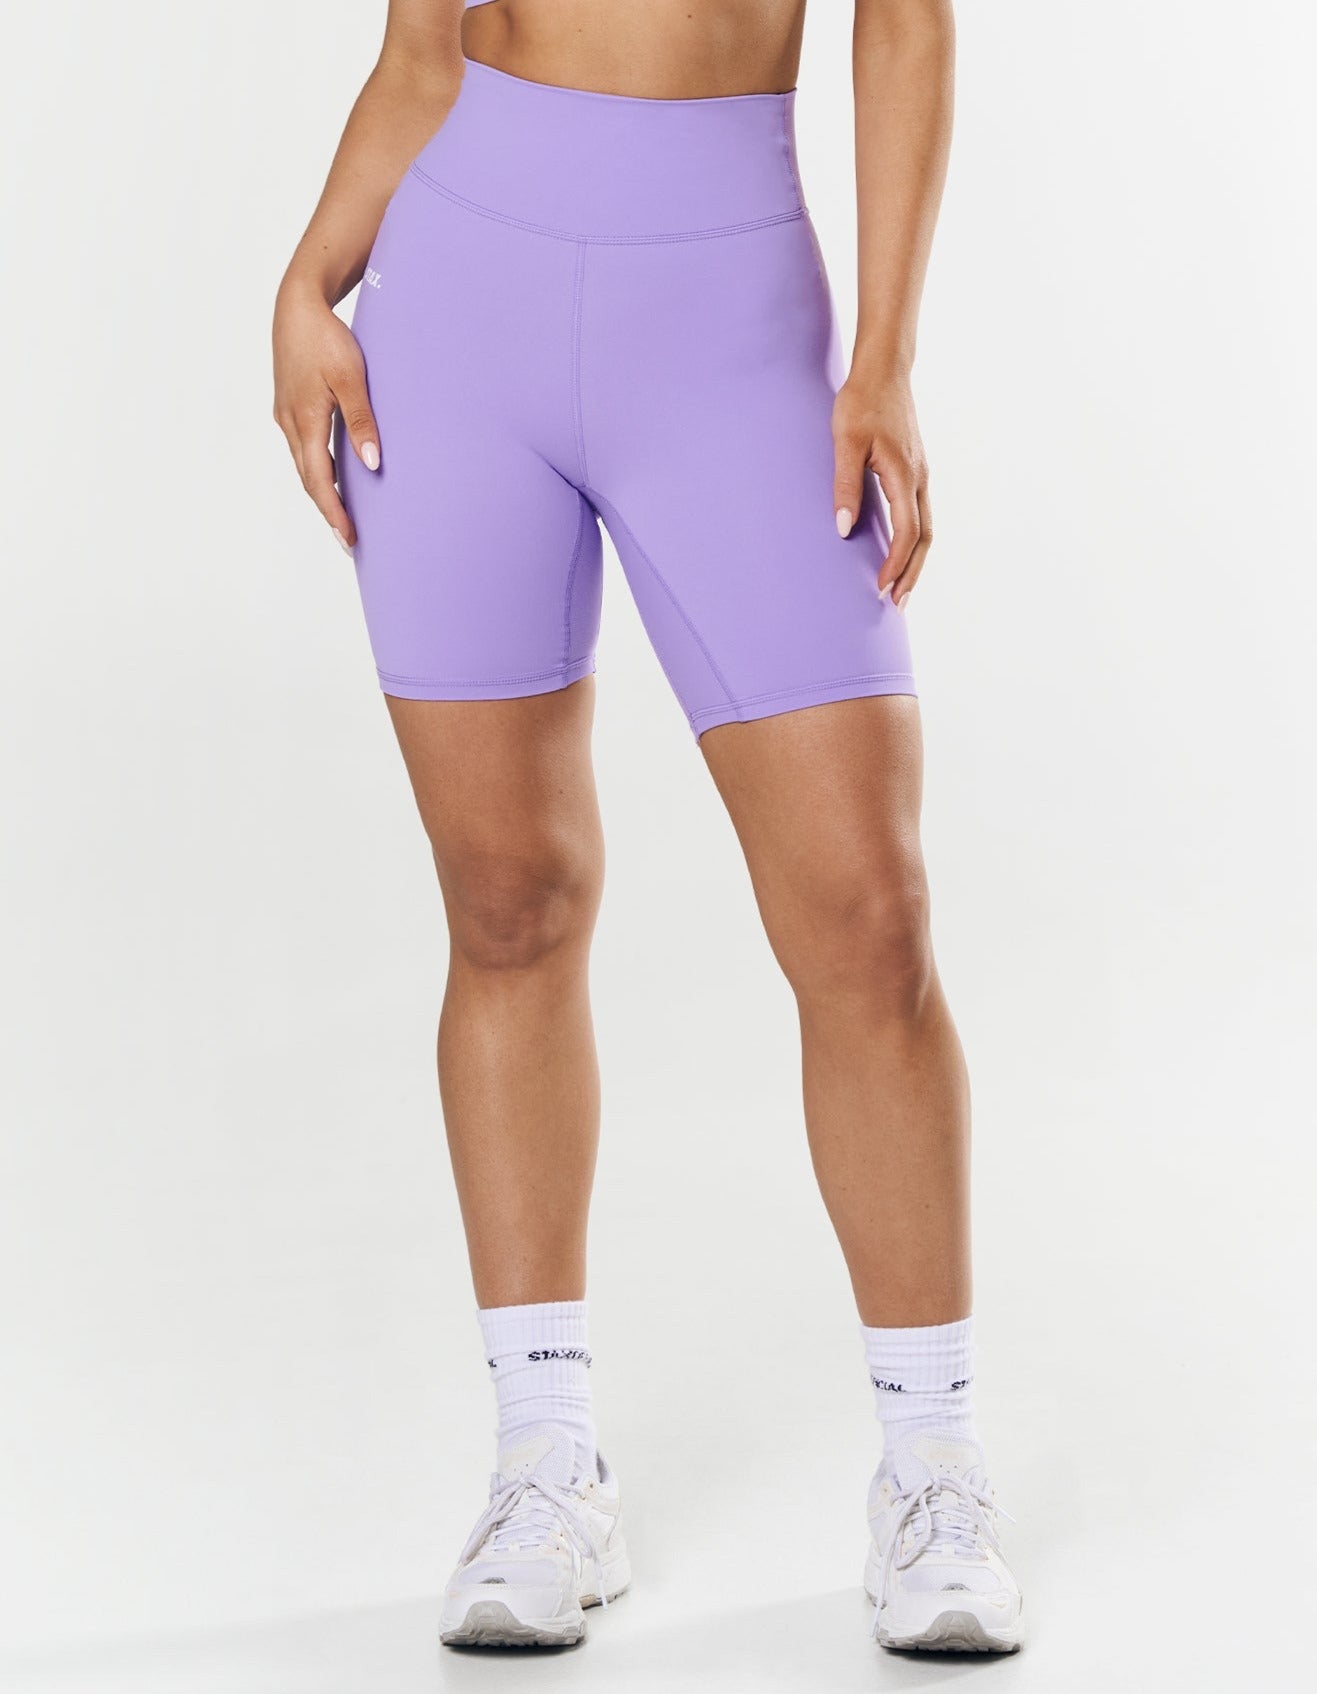 stax-original-bike-shorts-nandex-lilac